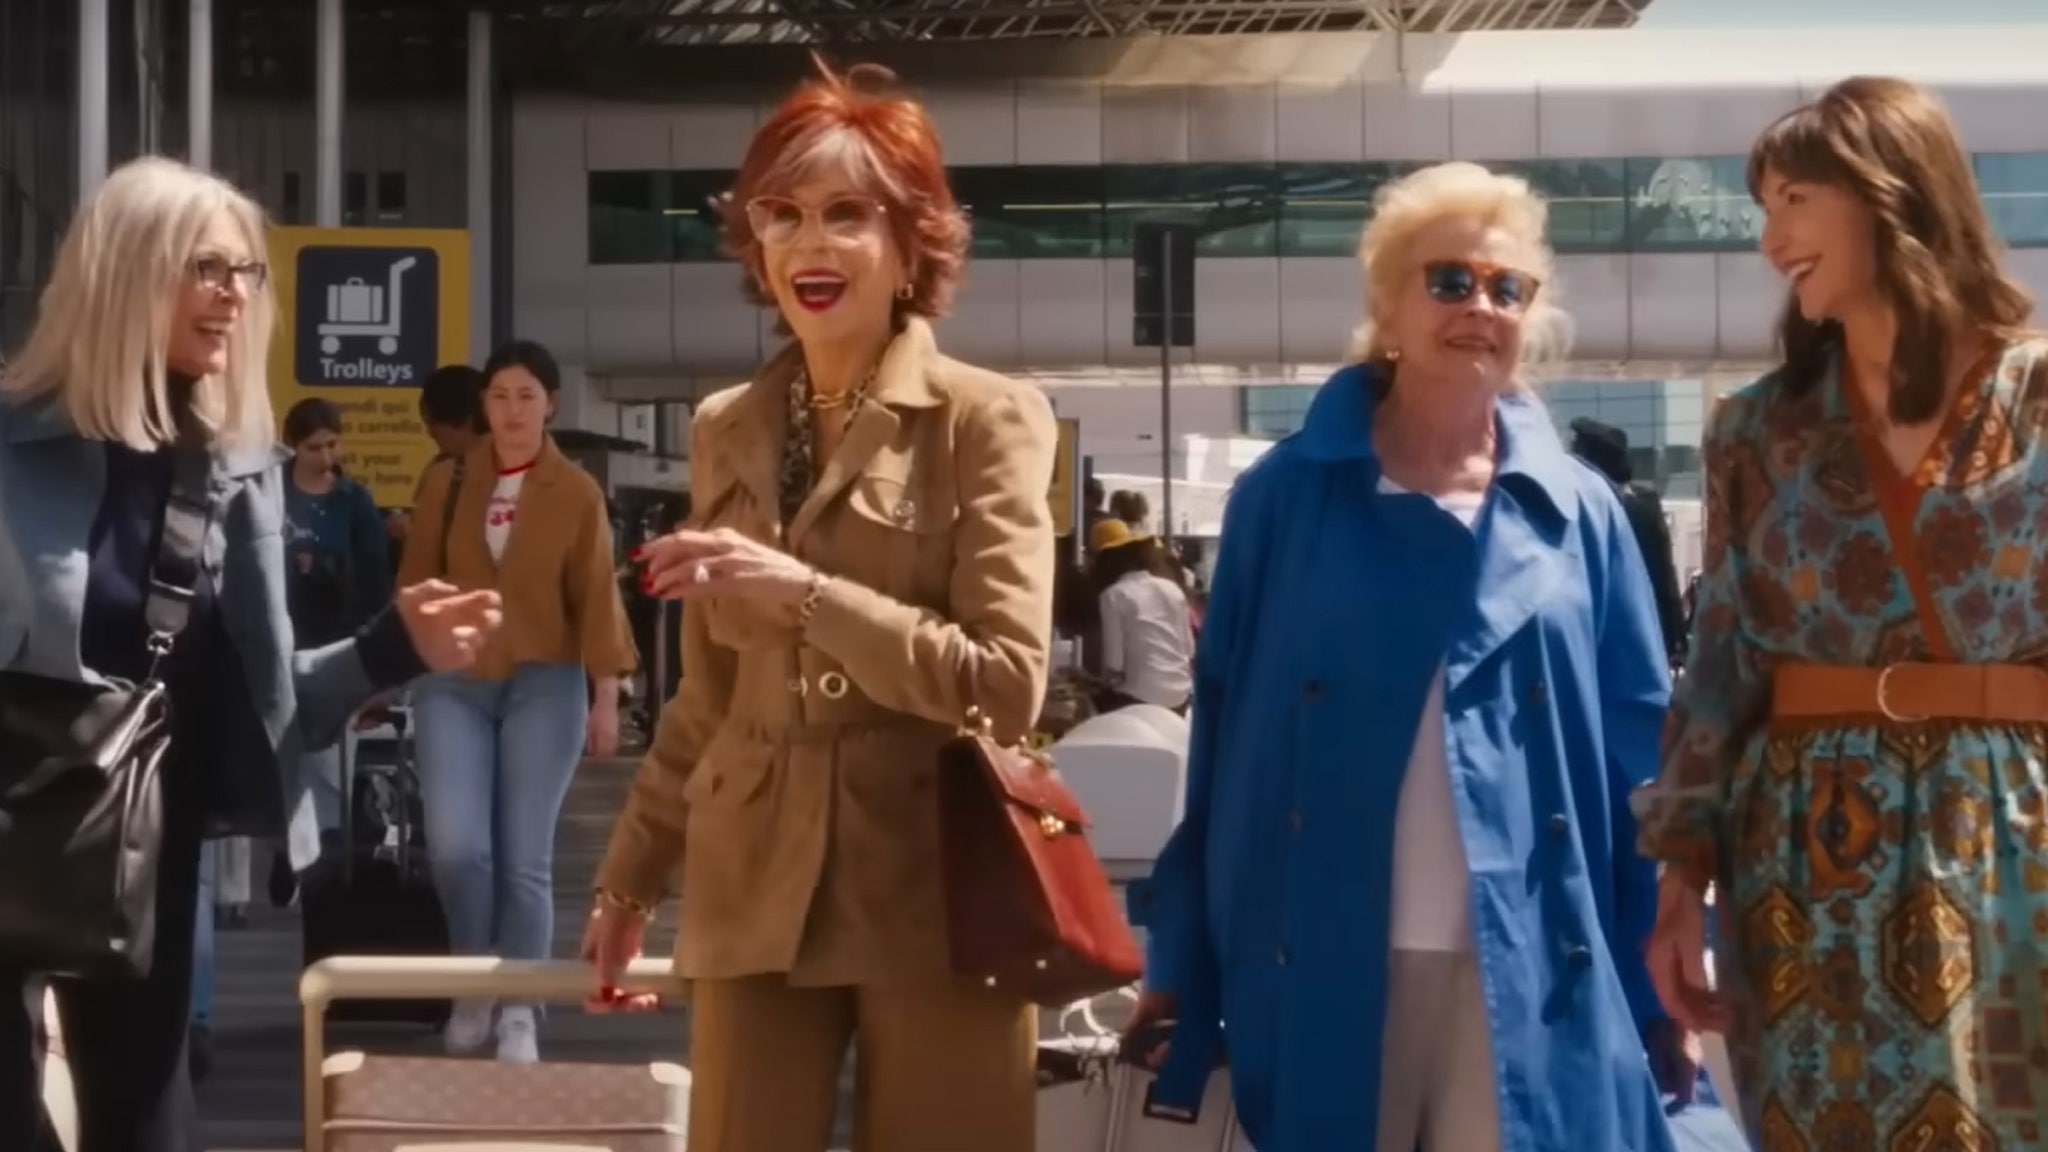 Book Club 2: Jane Fonda, Diane Keaton & the Ladies Are Back in Raunchy Trailer